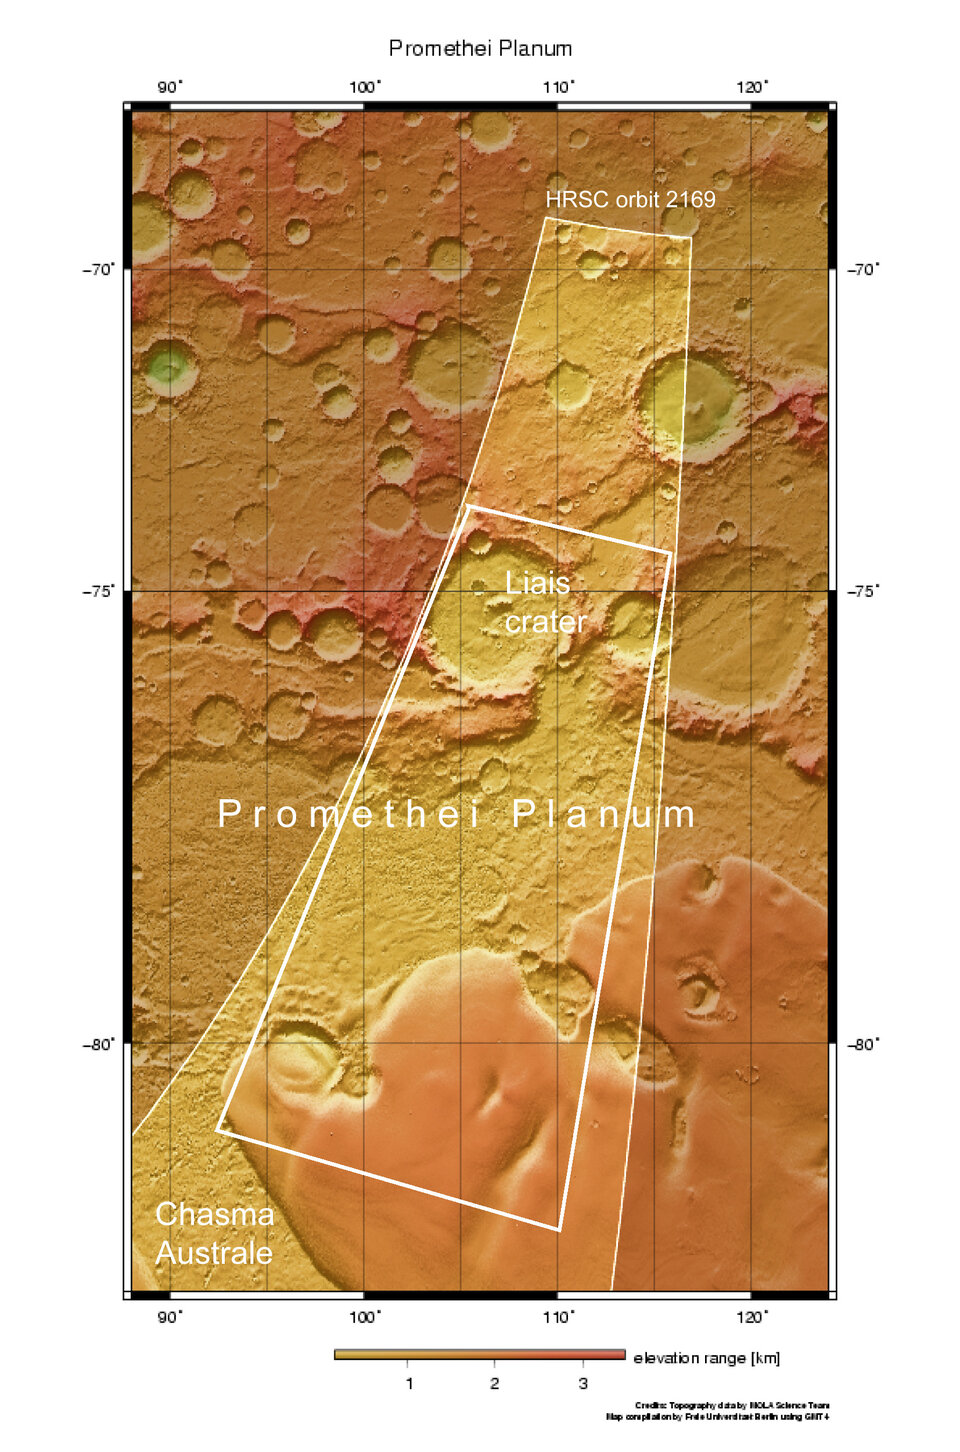 Promethei Planum context map